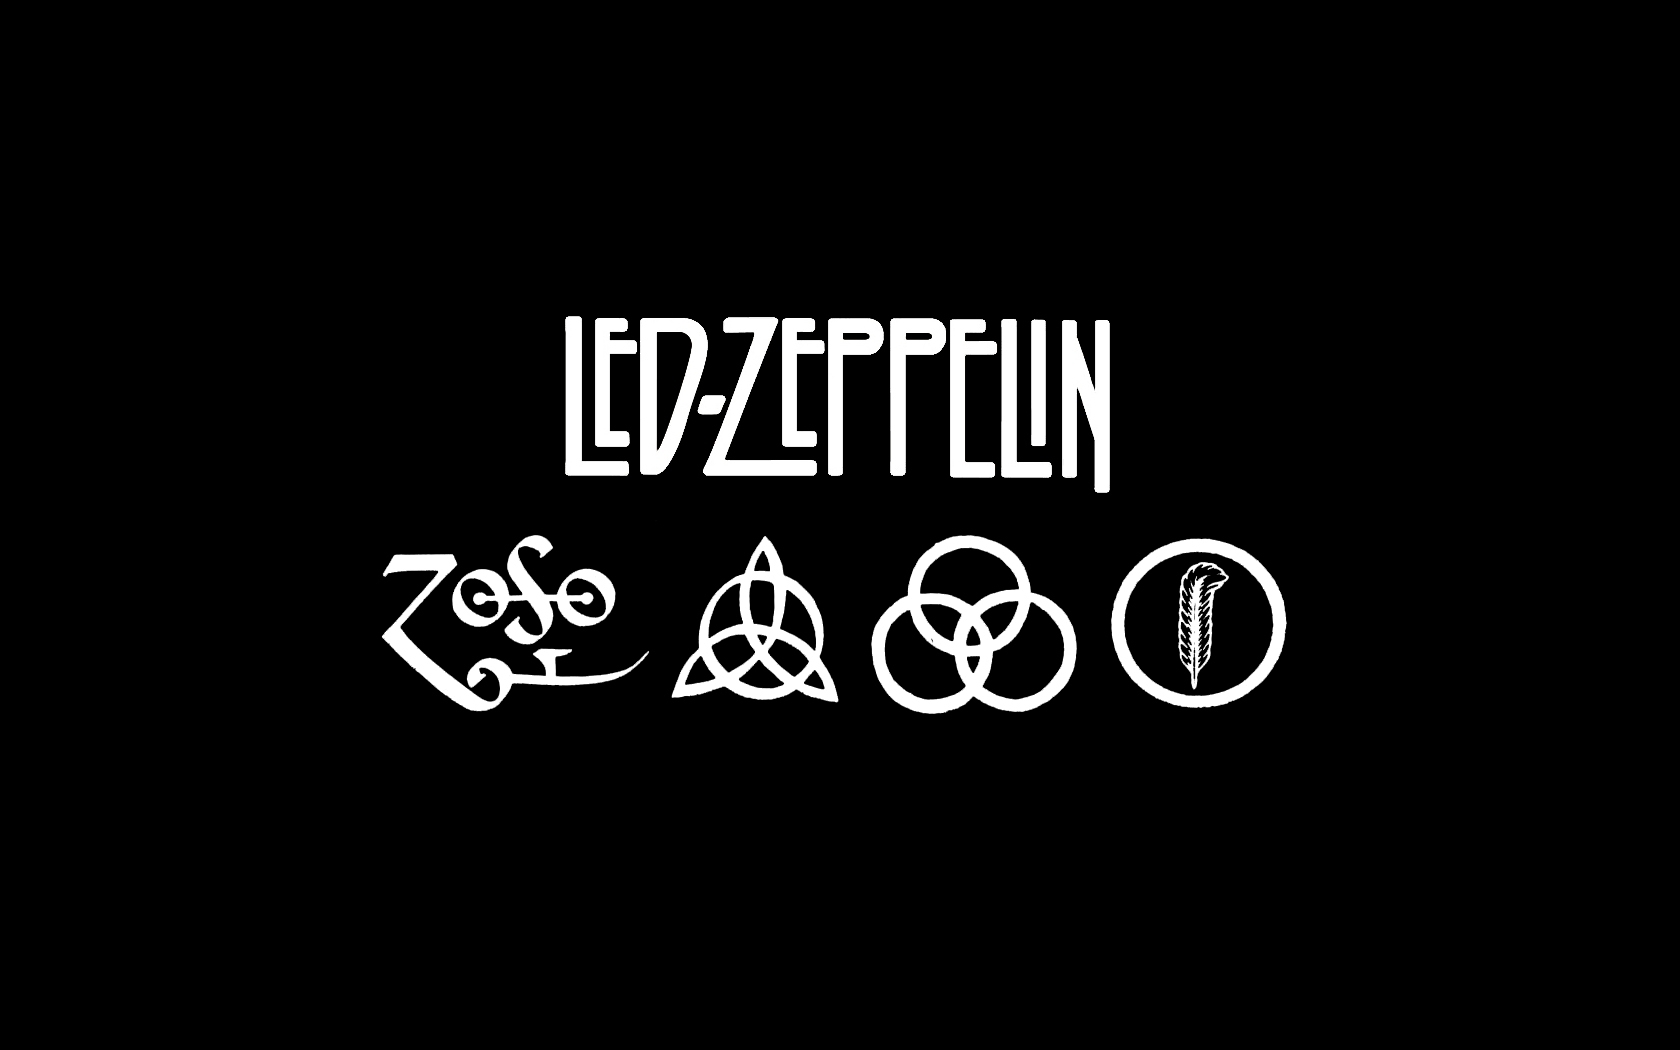 10 New Led Zeppelin Wallpaper Hd FULL HD 1920×1080 For PC Background